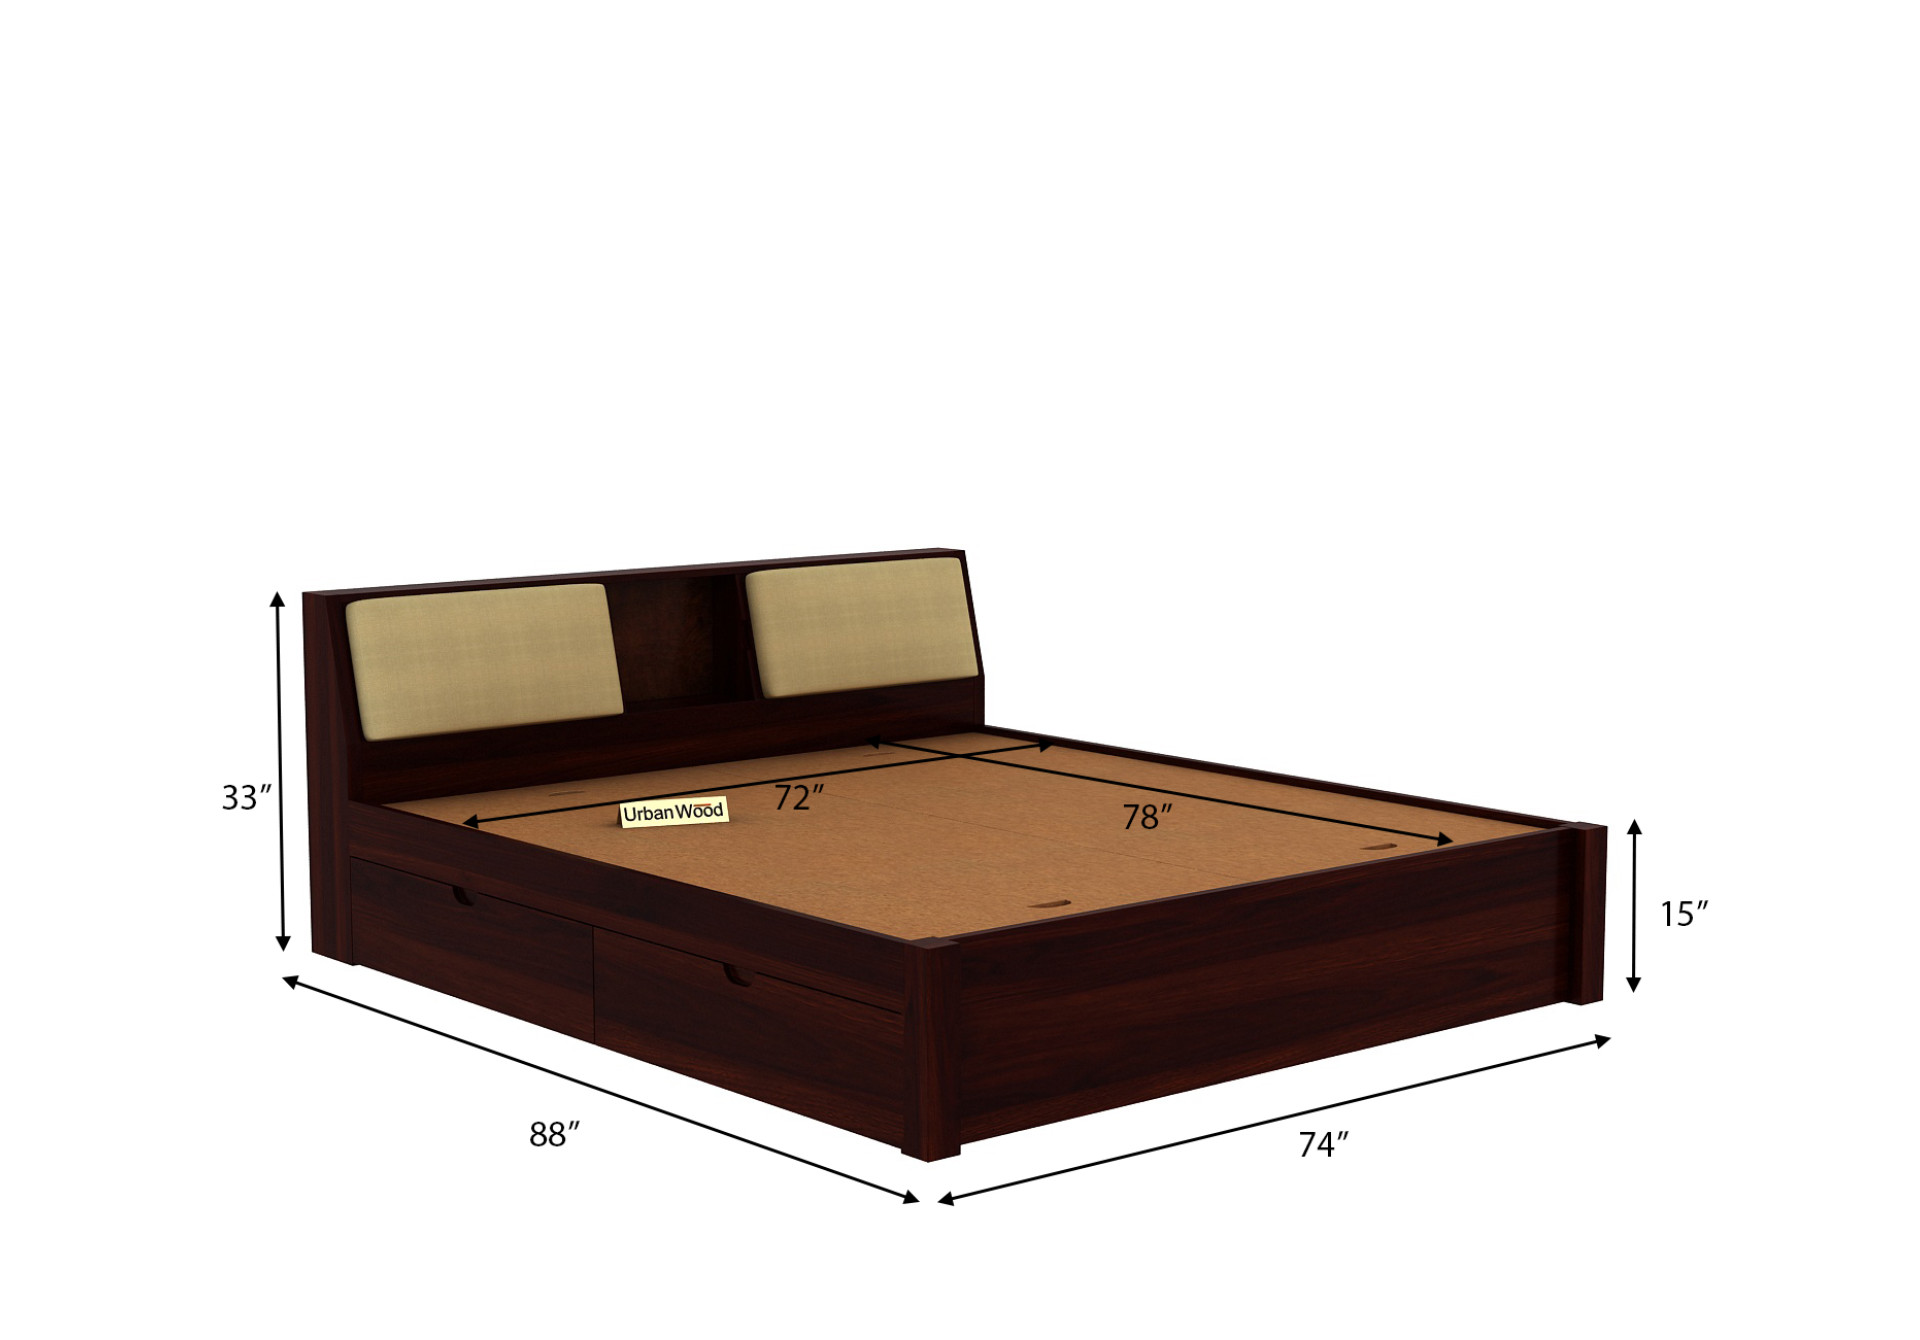 Laverock Bed With Storage (King Size, Walnut Finish)